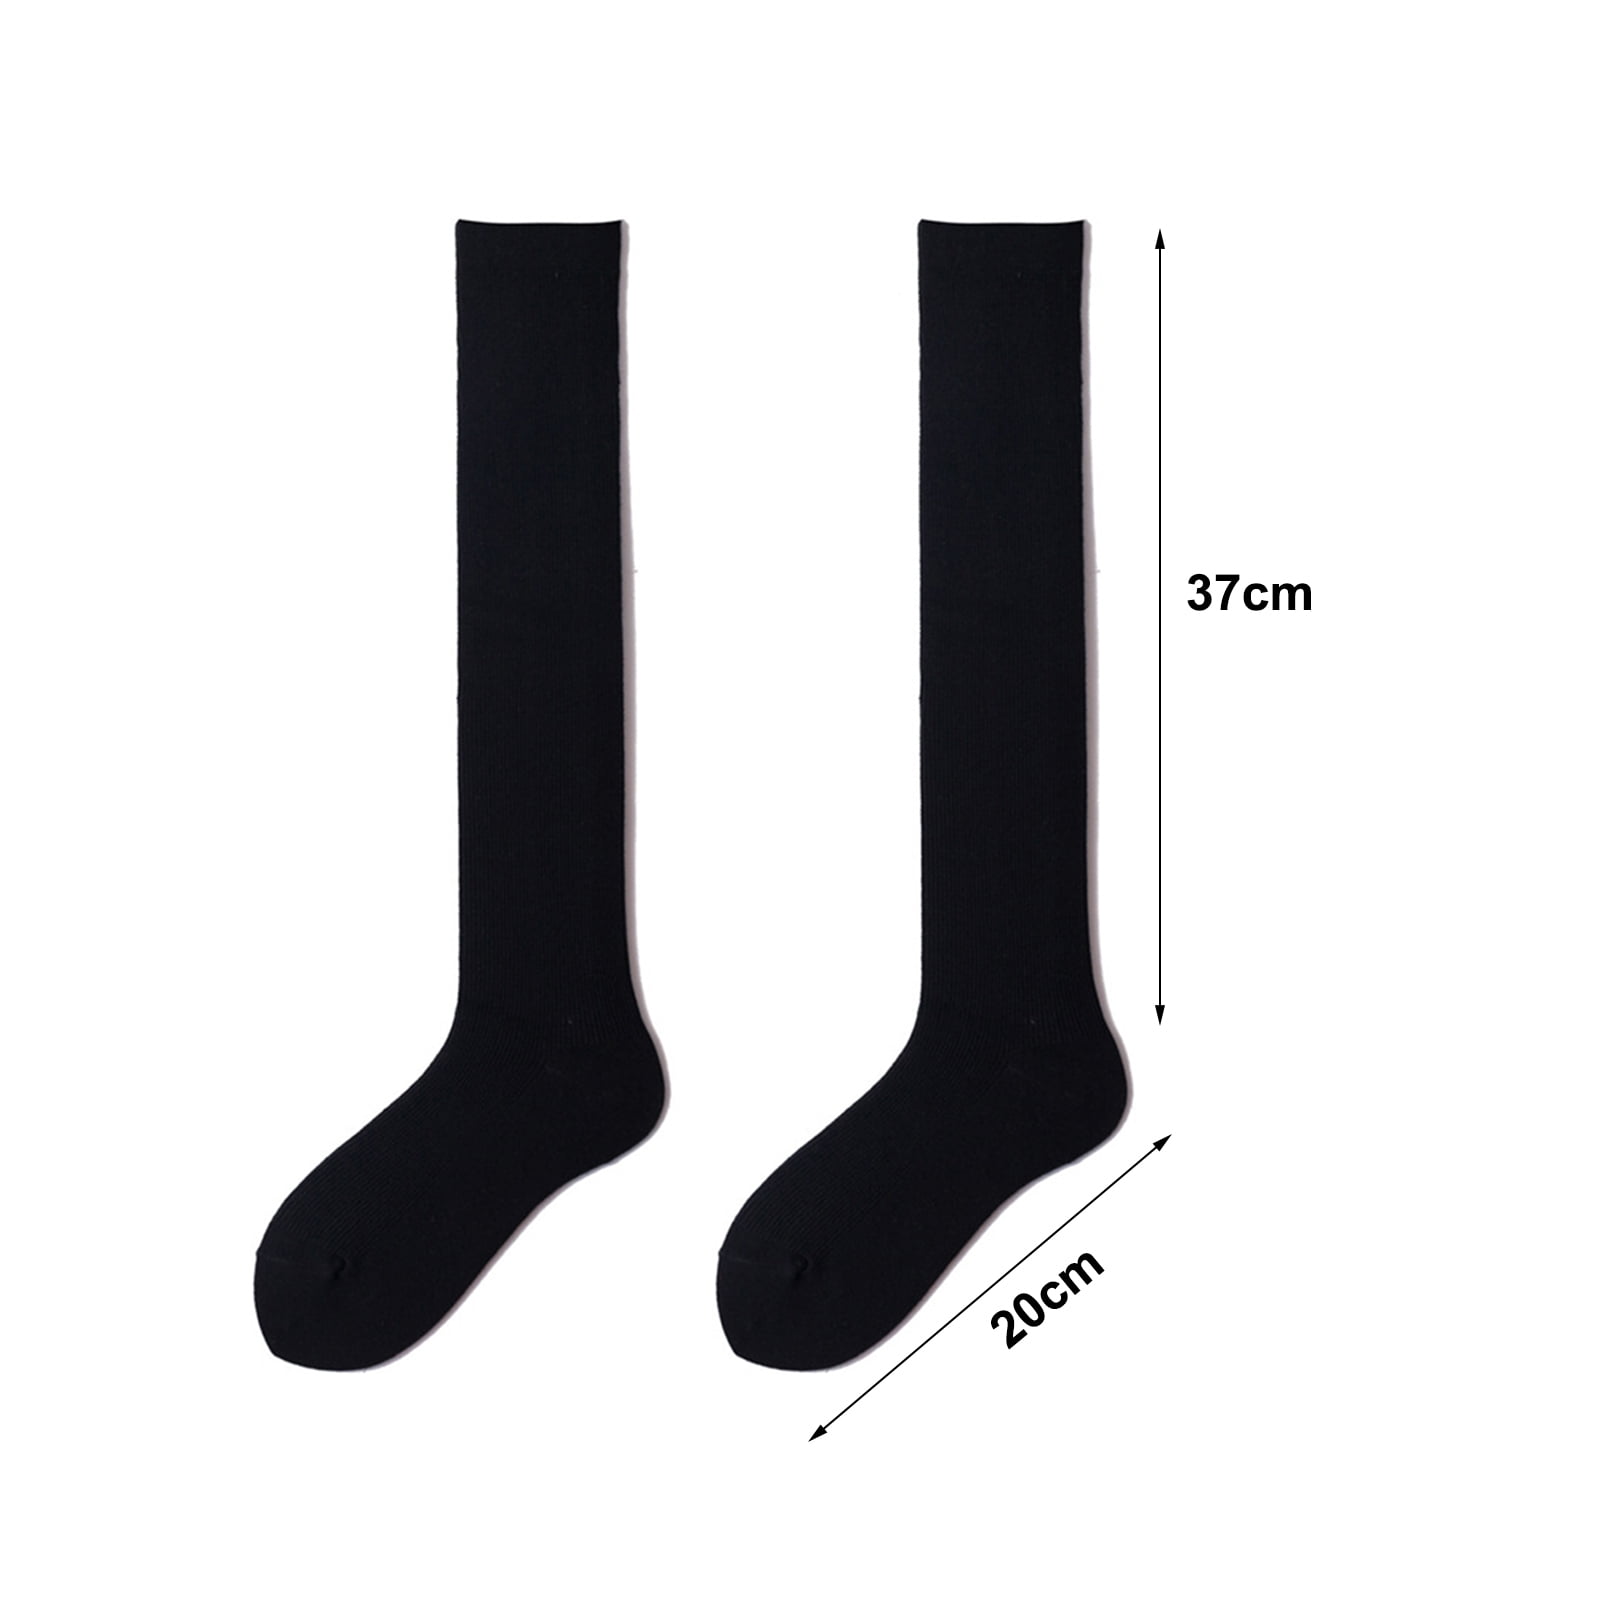 harmtty 1 Pair Leg Socks Adorable Skin-friendly Multi-colored